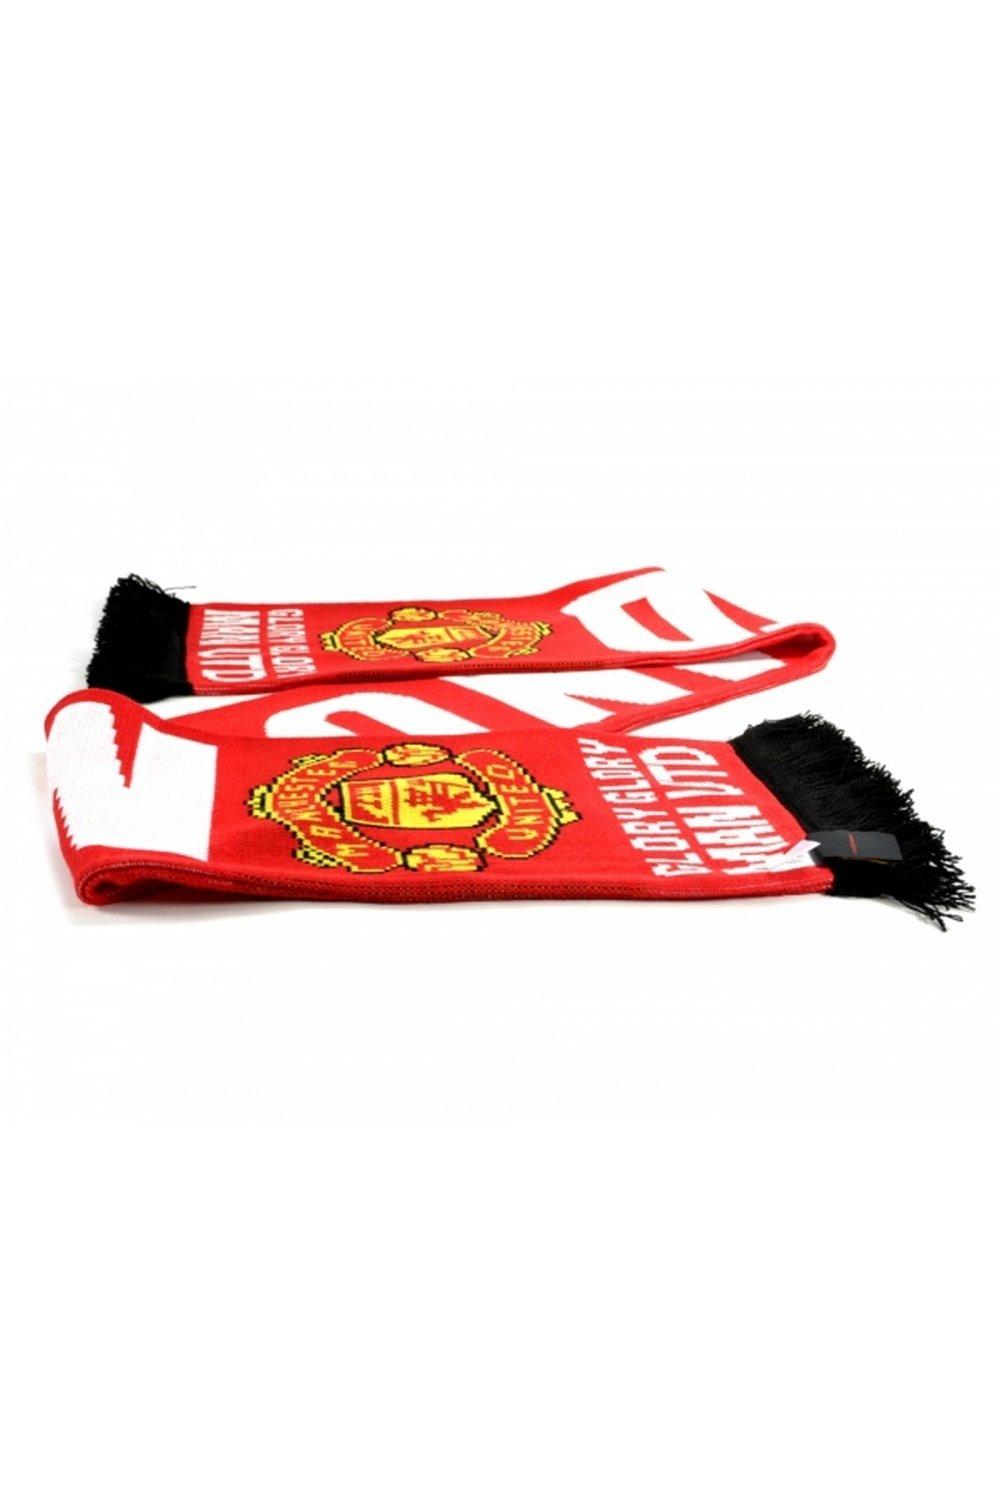 Официальный шарф Football Glory Glory Manchester United FC, мультиколор шарф фк манчестер юнайтед